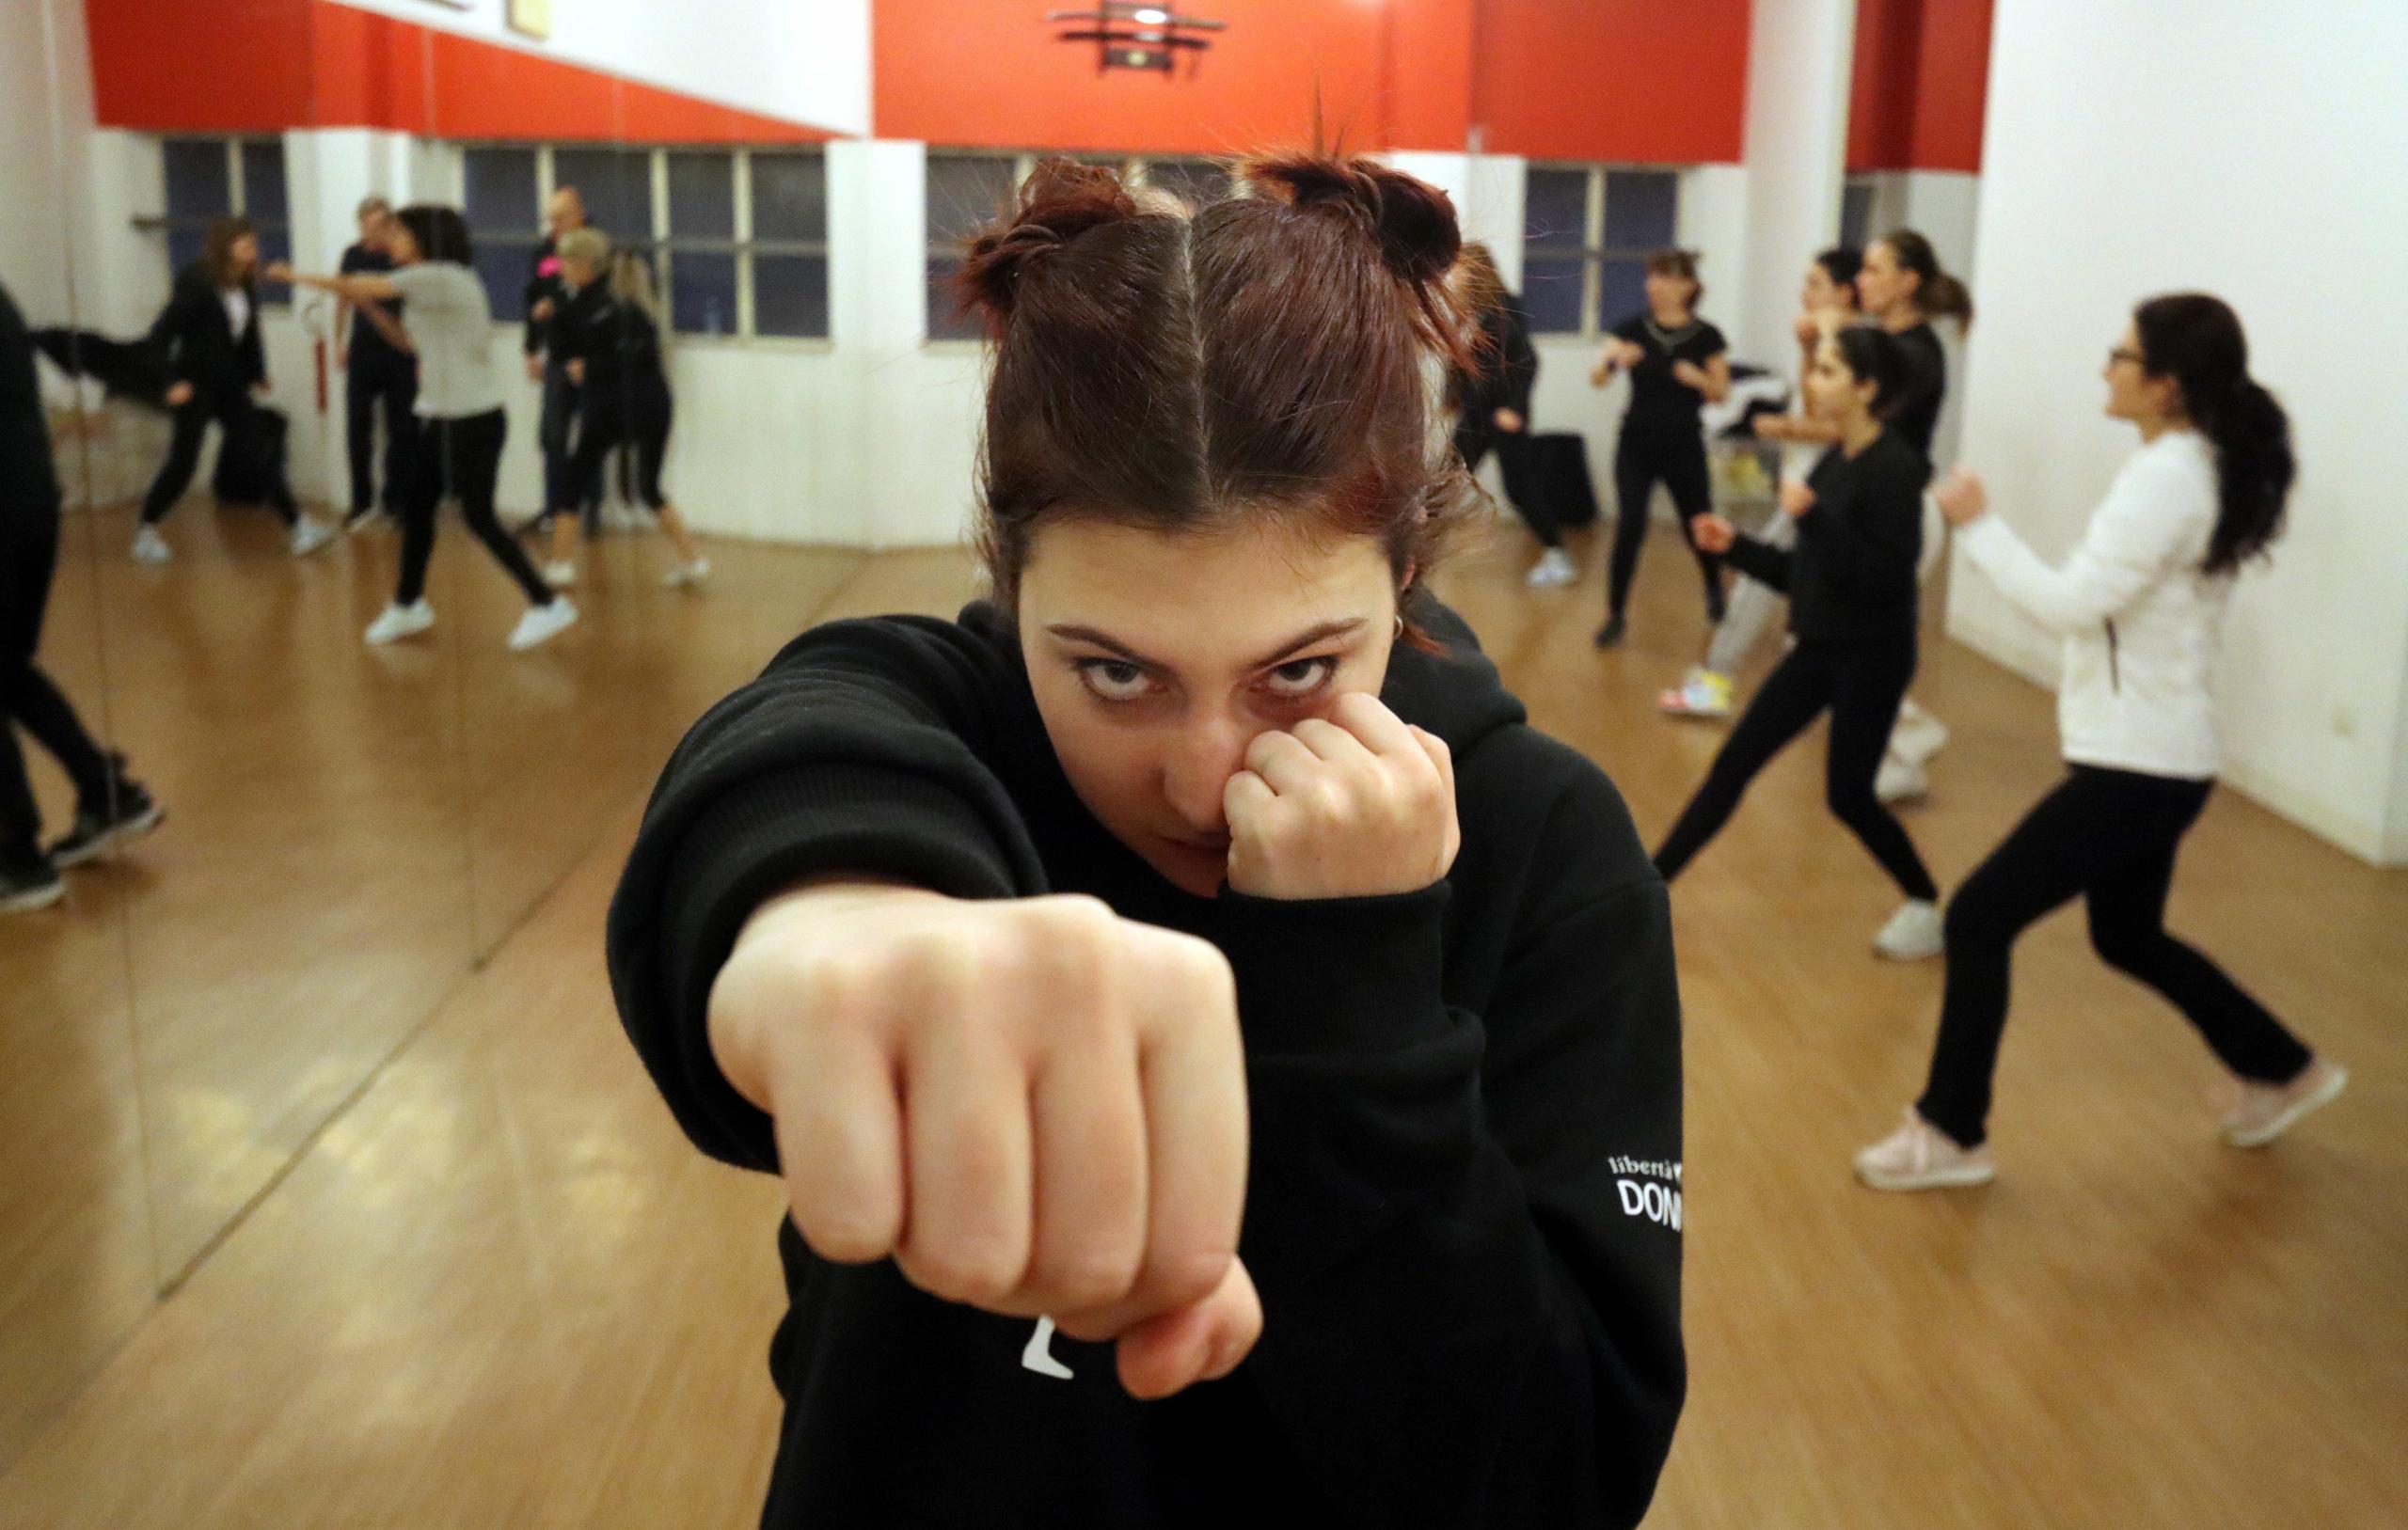 Sicurezza, sempre più ragazze praticano arti marziali: quasi